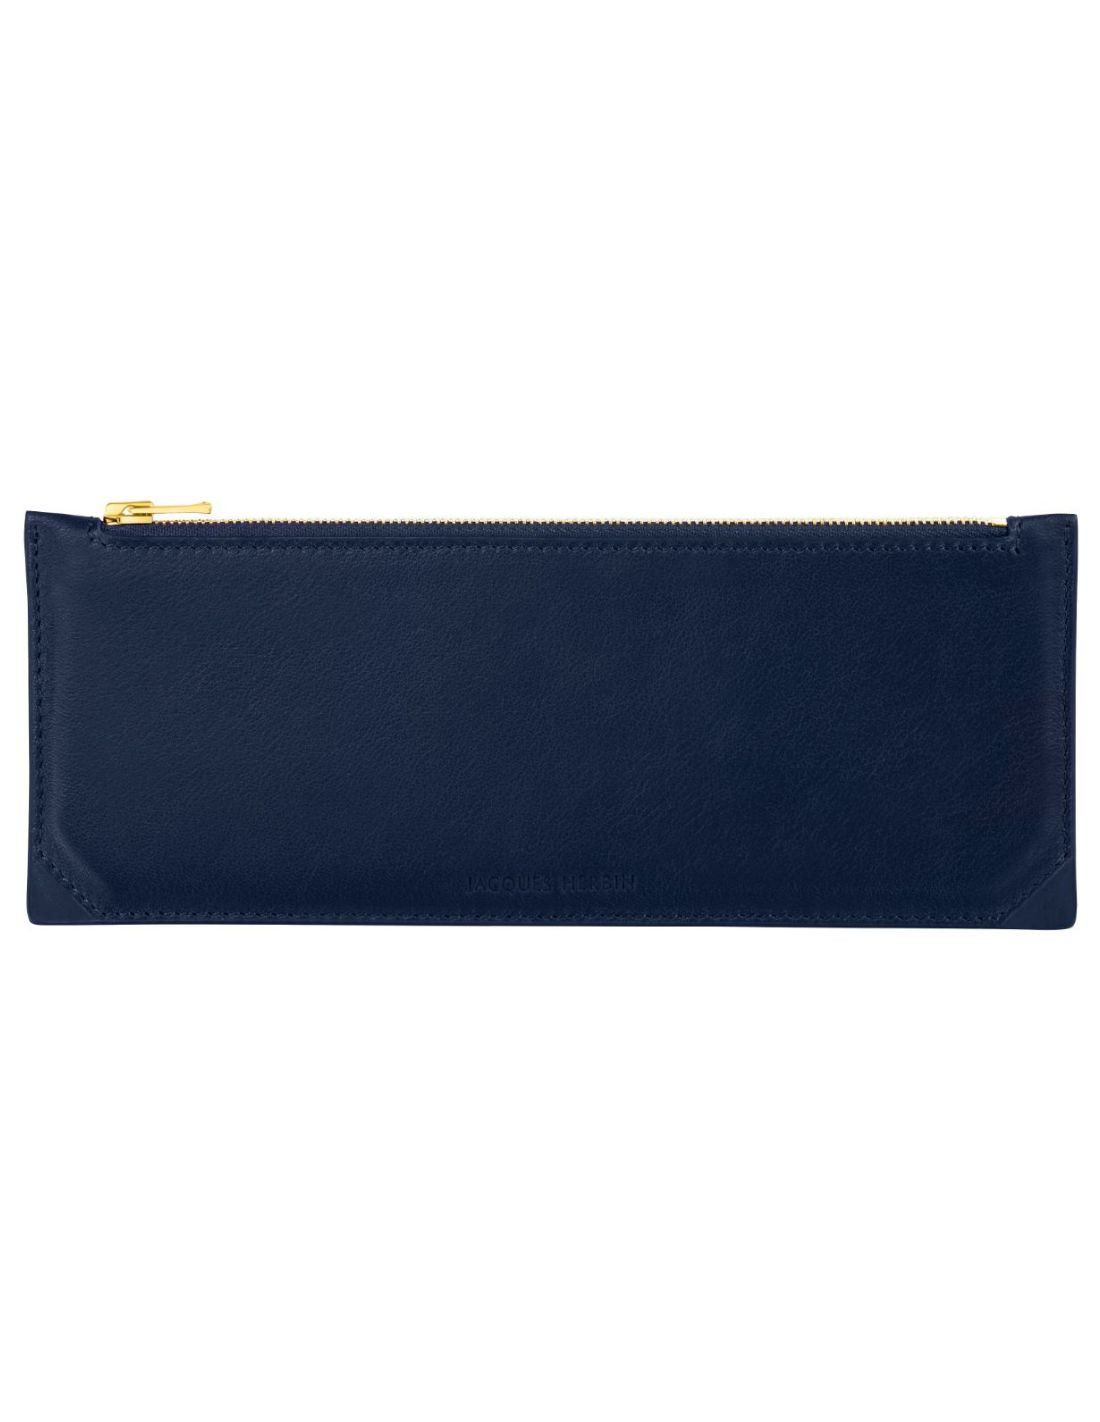 Leather Pencase - Large - Navy Blue - Jacques Herbin